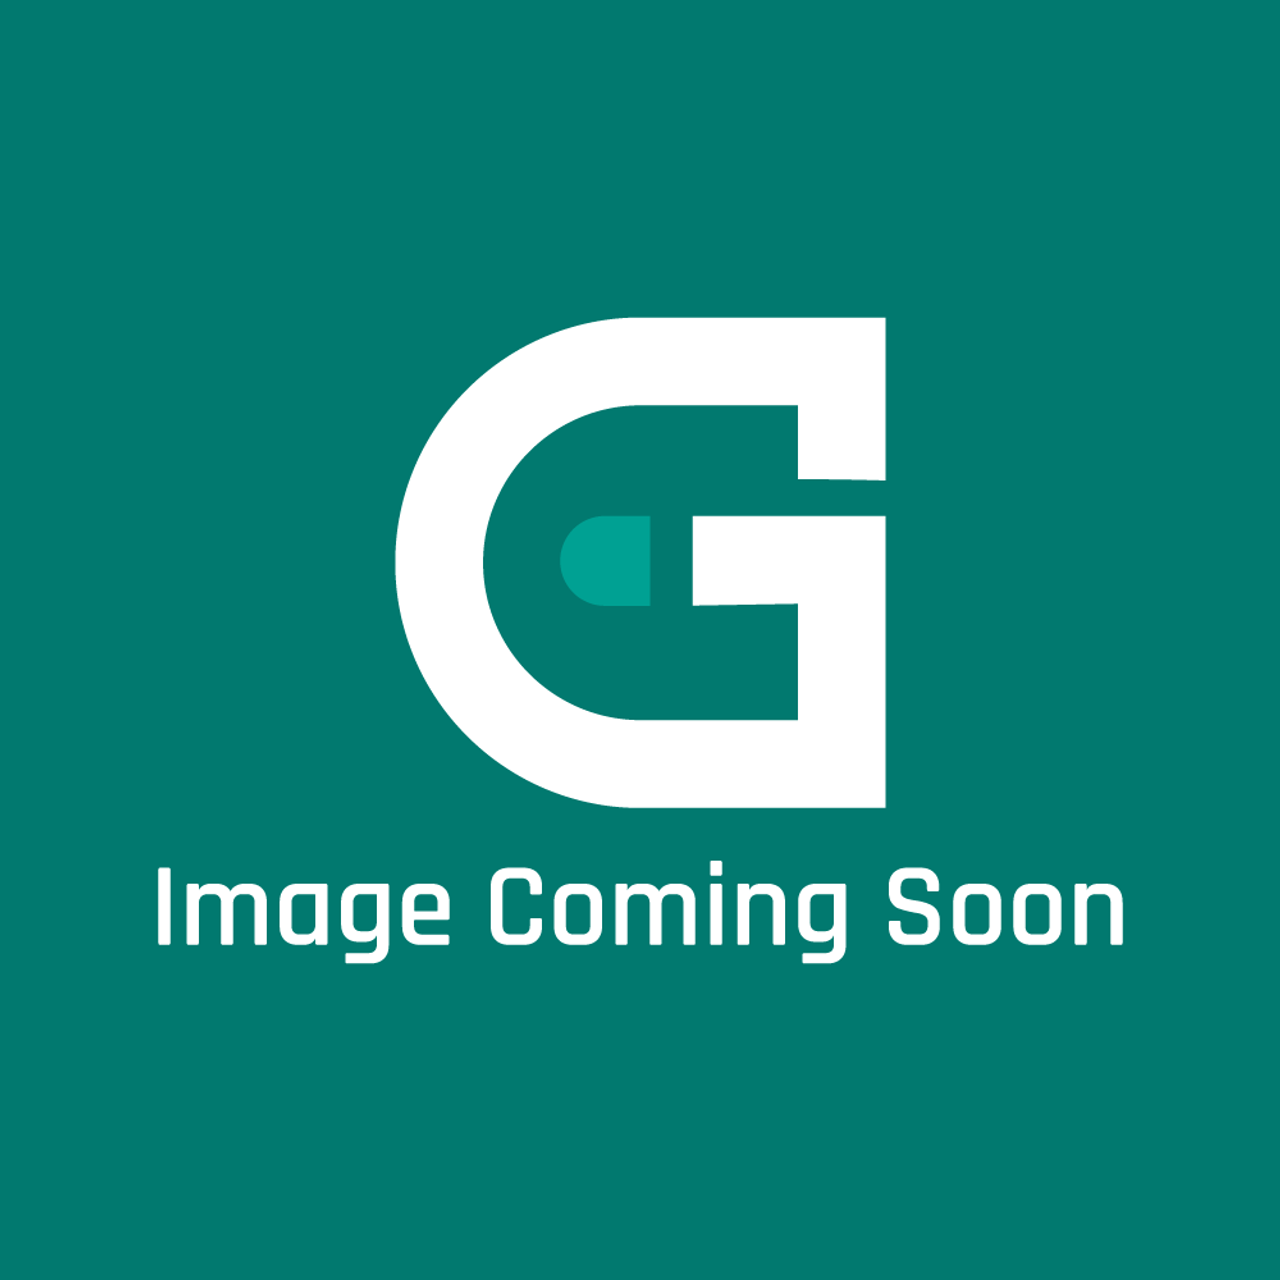 Garland CK1180398 - Hinge Assy Lt 7In - Image Coming Soon!